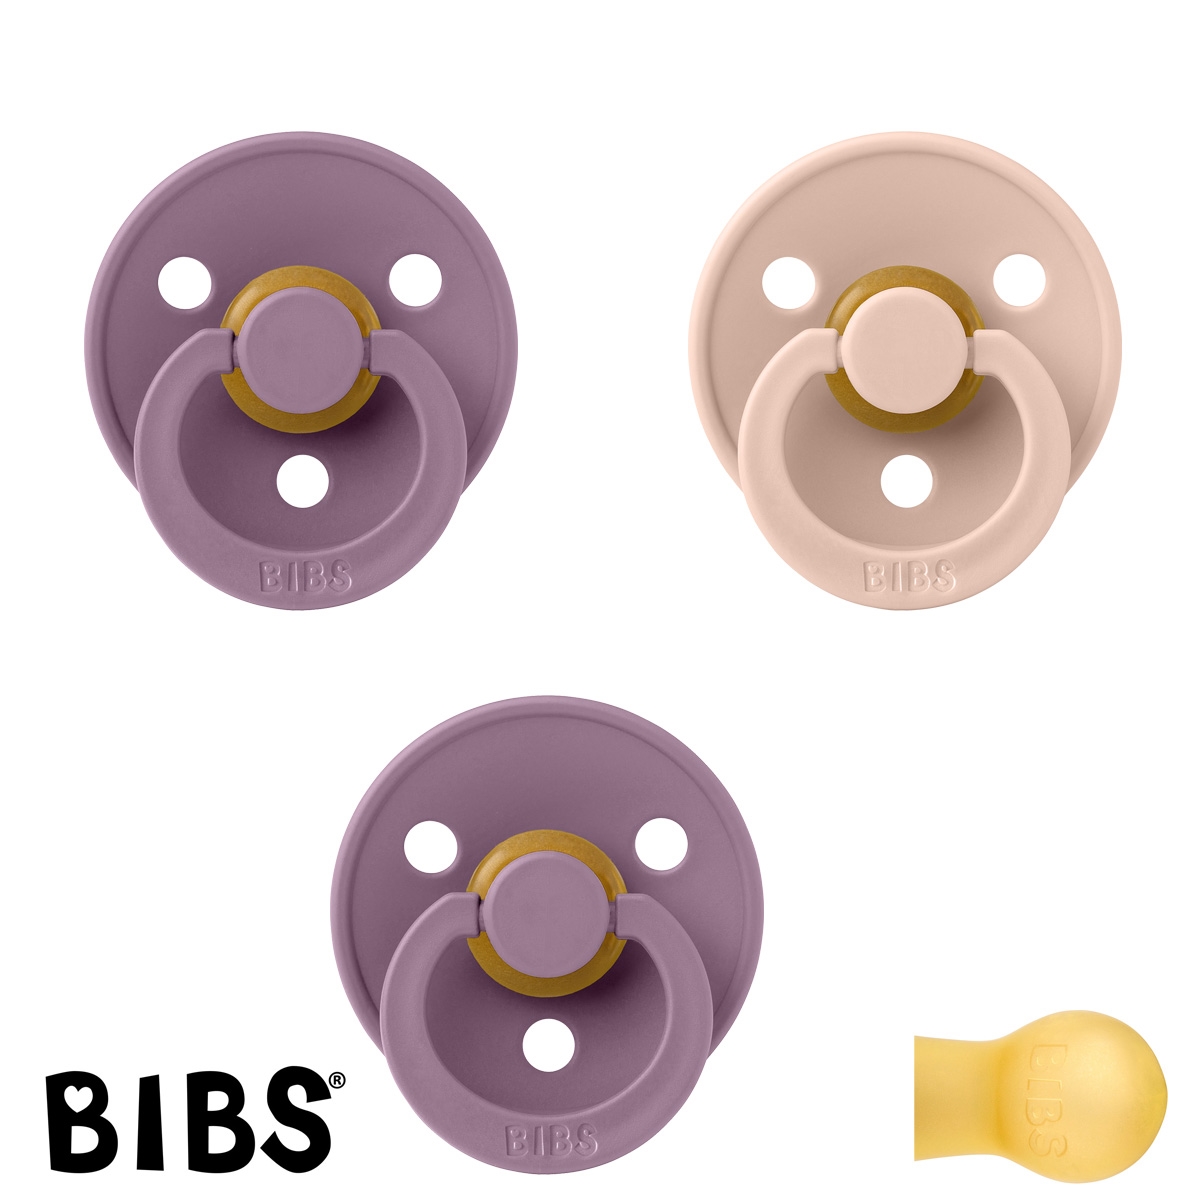 BIBS Colour Sutter med navn str2, 2 Mauve, 1 Blush, Runde latex, Pakke med 3 sutter